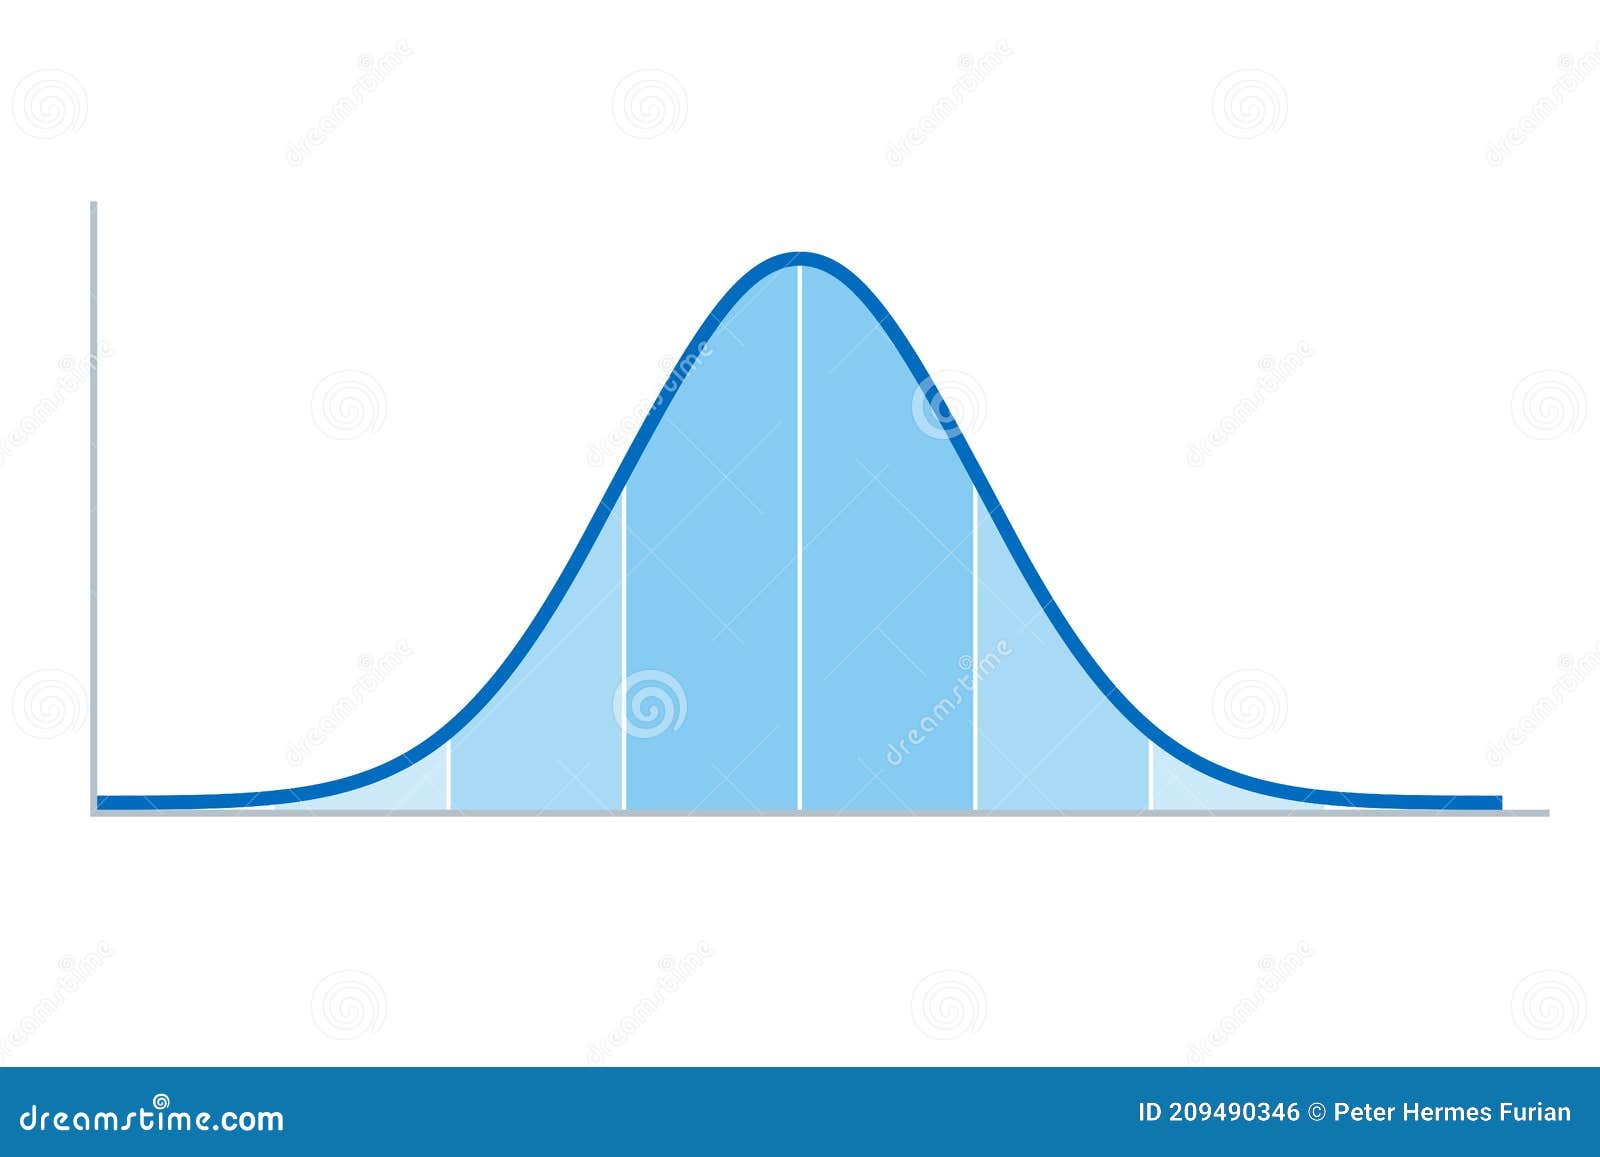 gaussian distribution, standard normal distribution, bell curve